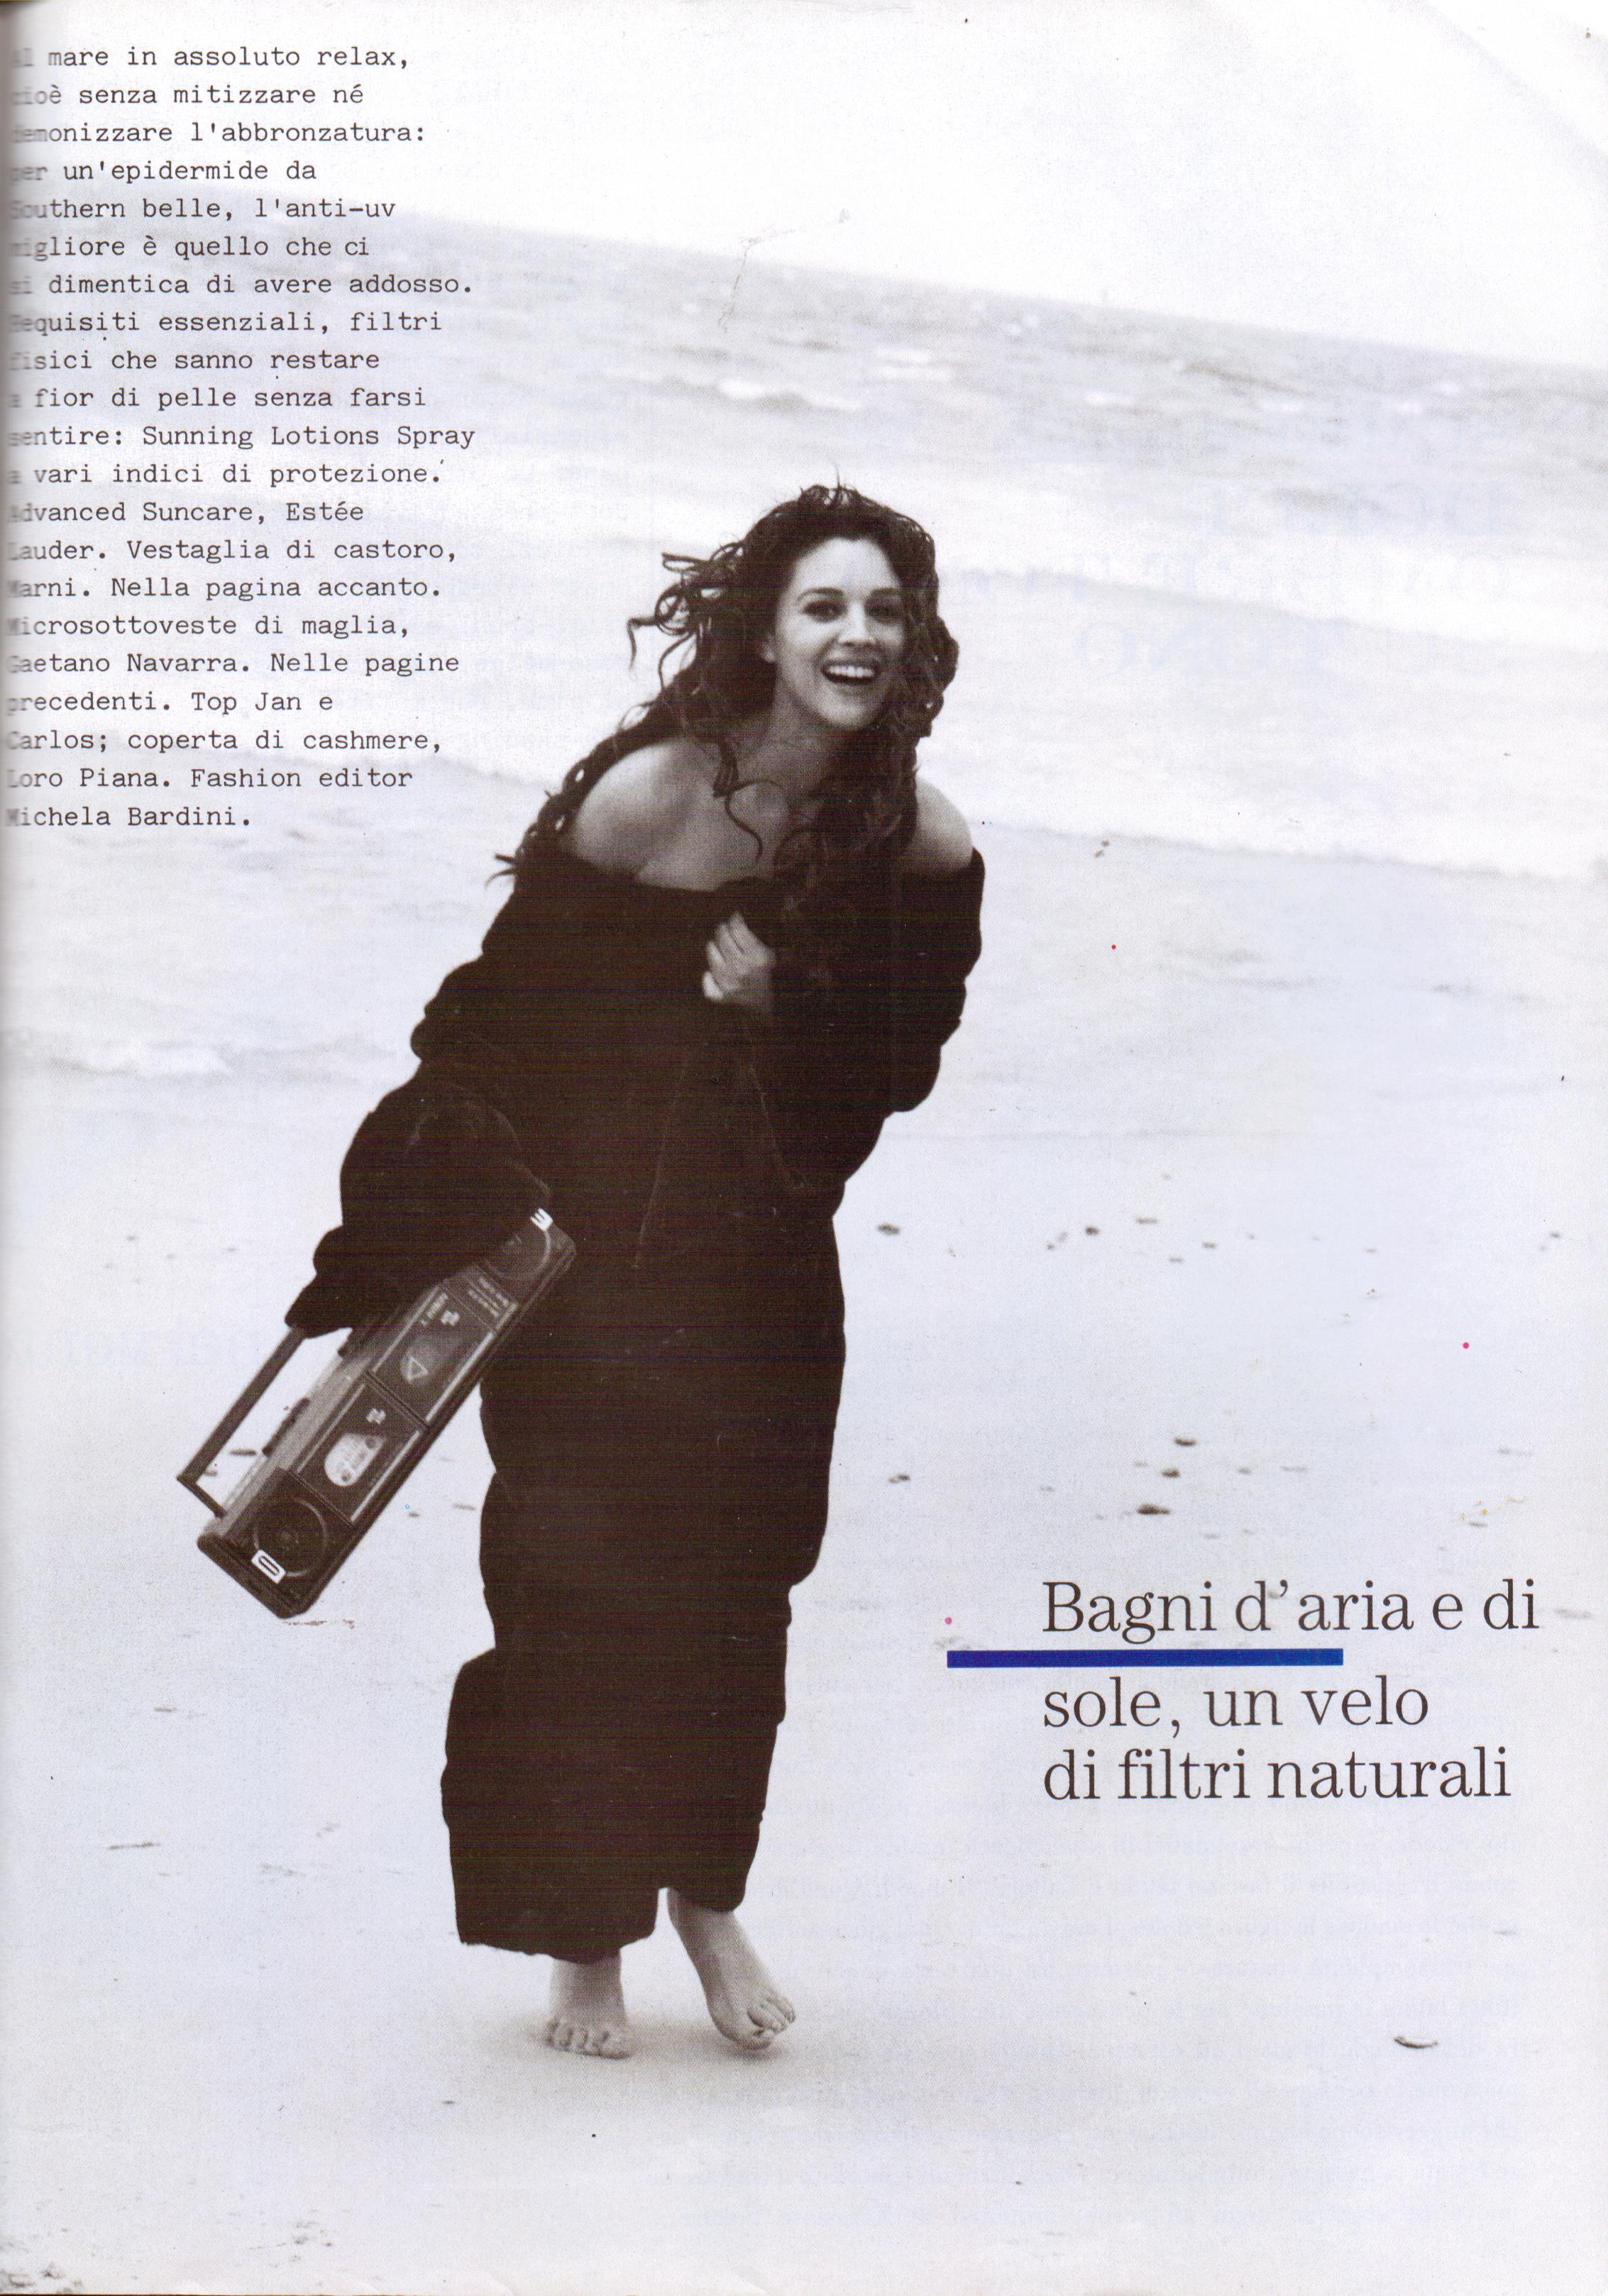 Monica_Bellucci_--_VOGUE_ITALY_1994_004.jpg